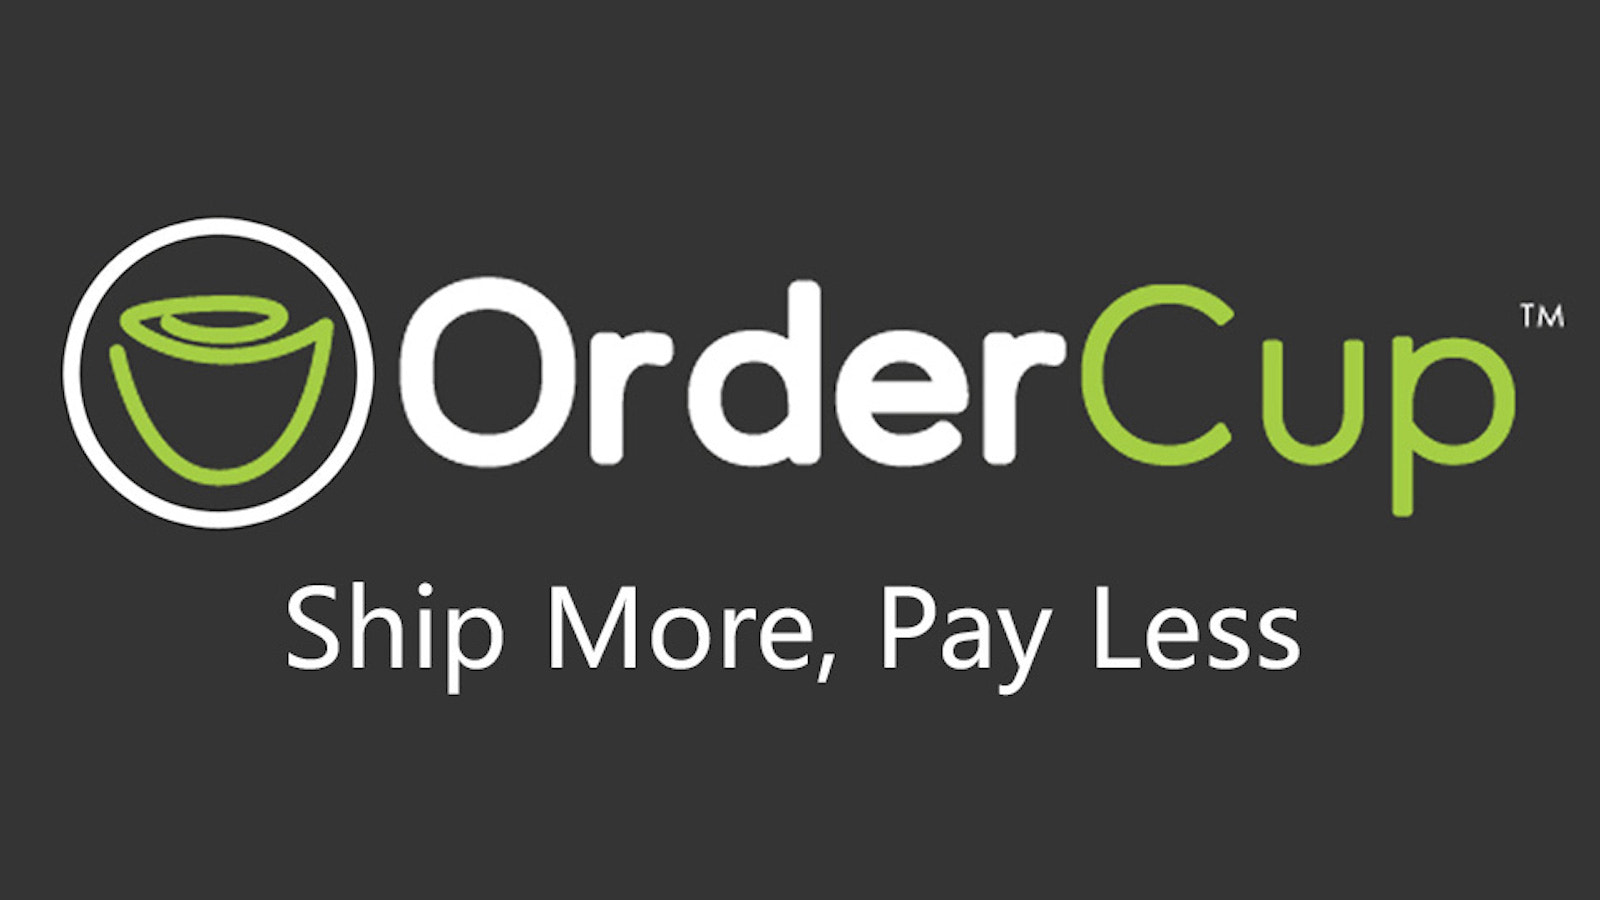 OrderCup: Ship More, Pay Less